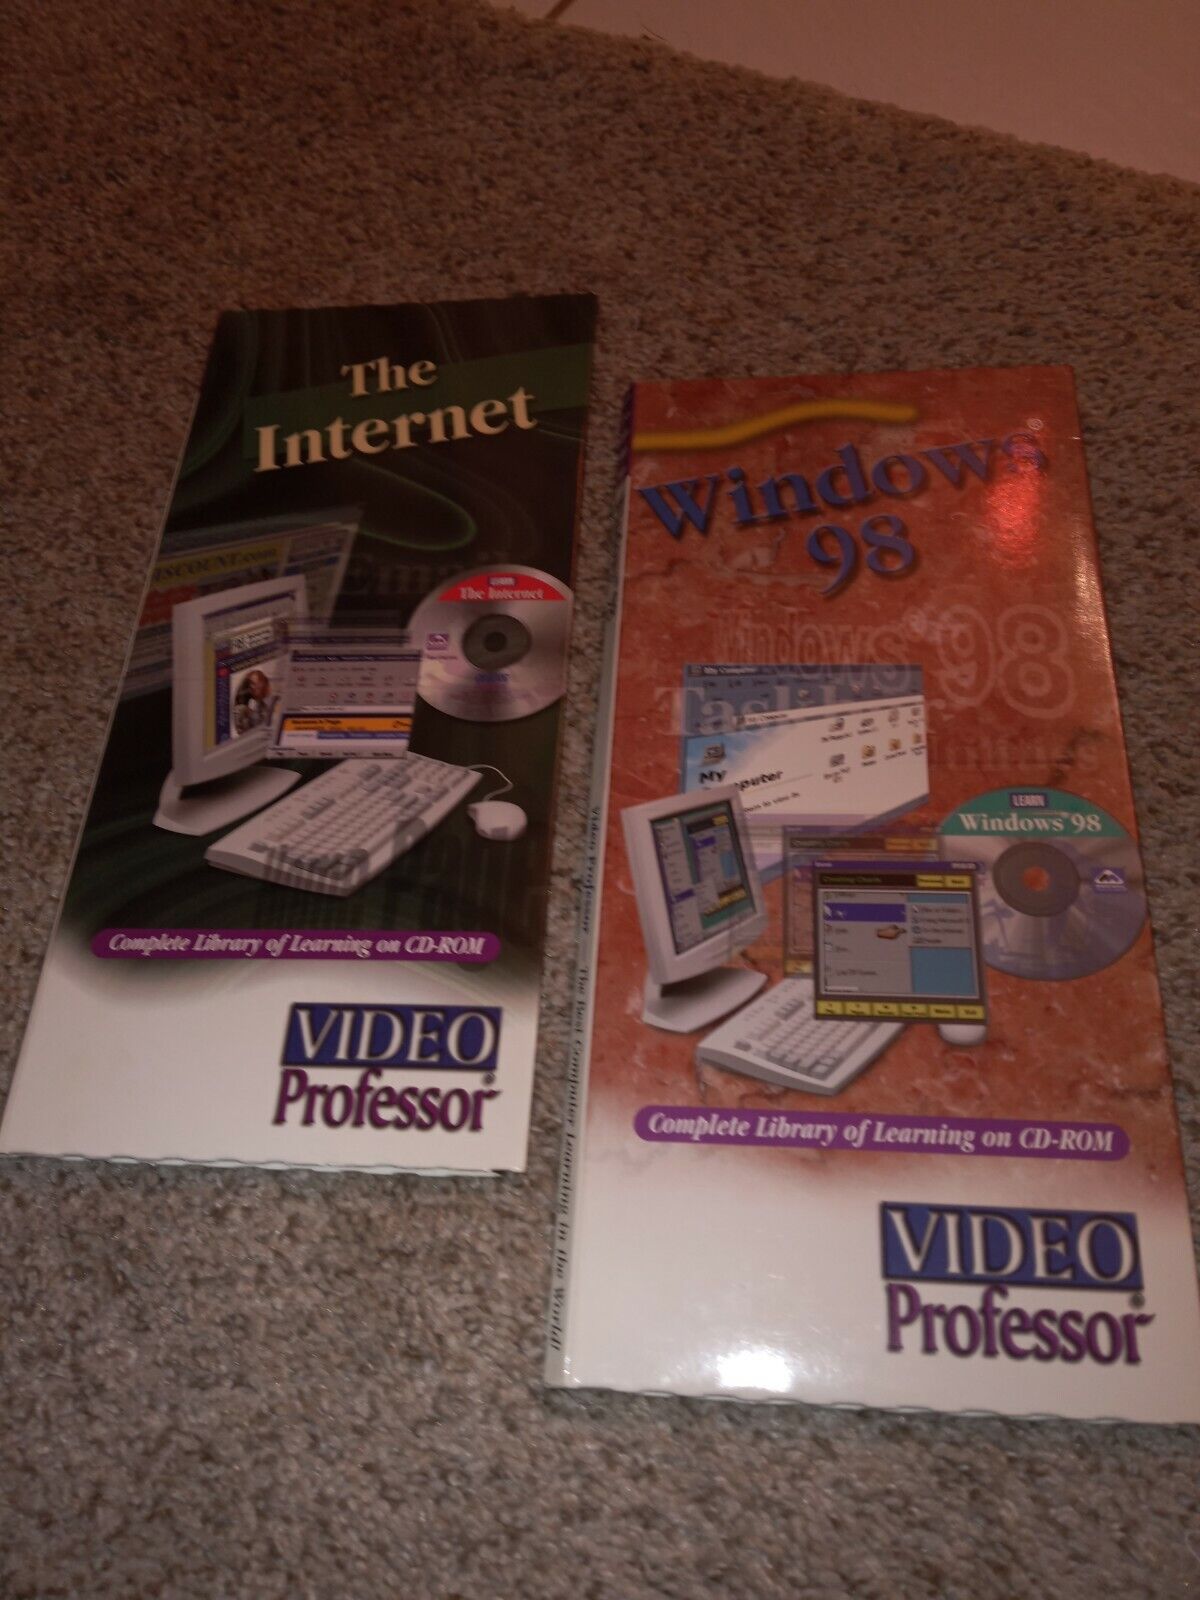 Windows 98  video professor & The internet video professor used